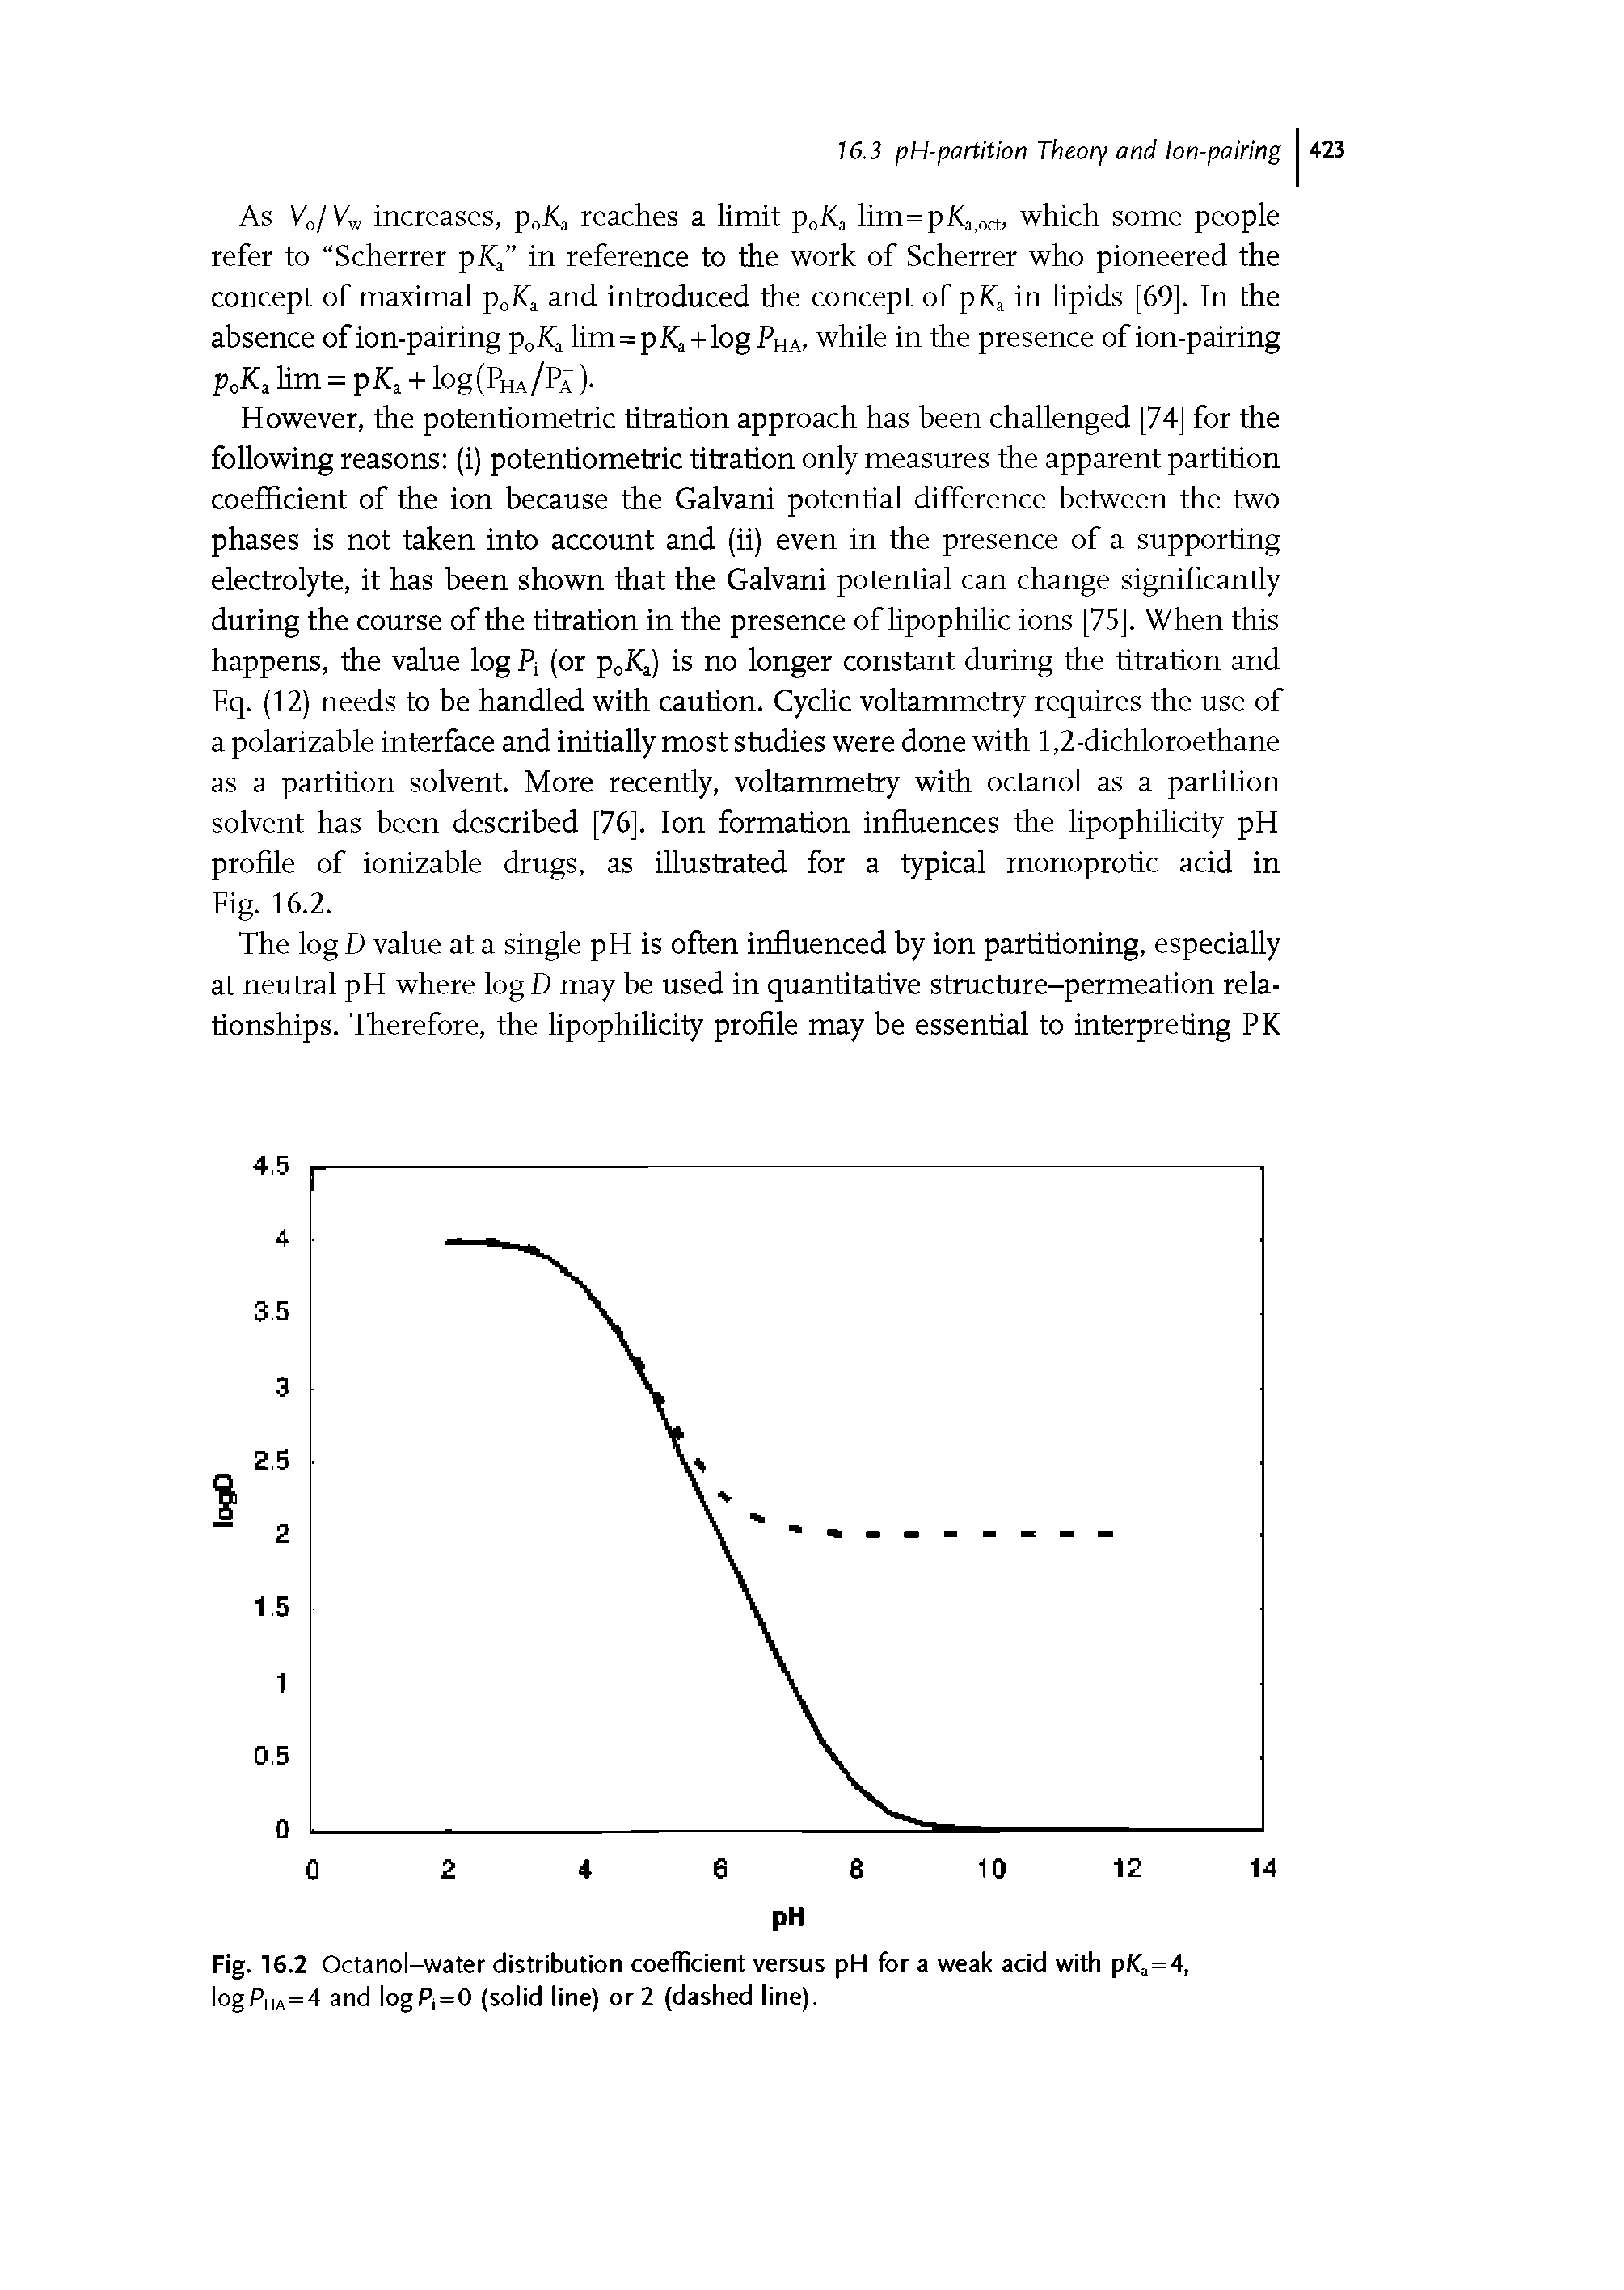 Fig. 16.2 Octanol-water distribution coefficient versus pH for a weak acid with pfC=4, logPHA=4 and logP =0 (solid line) or 2 (dashed line).